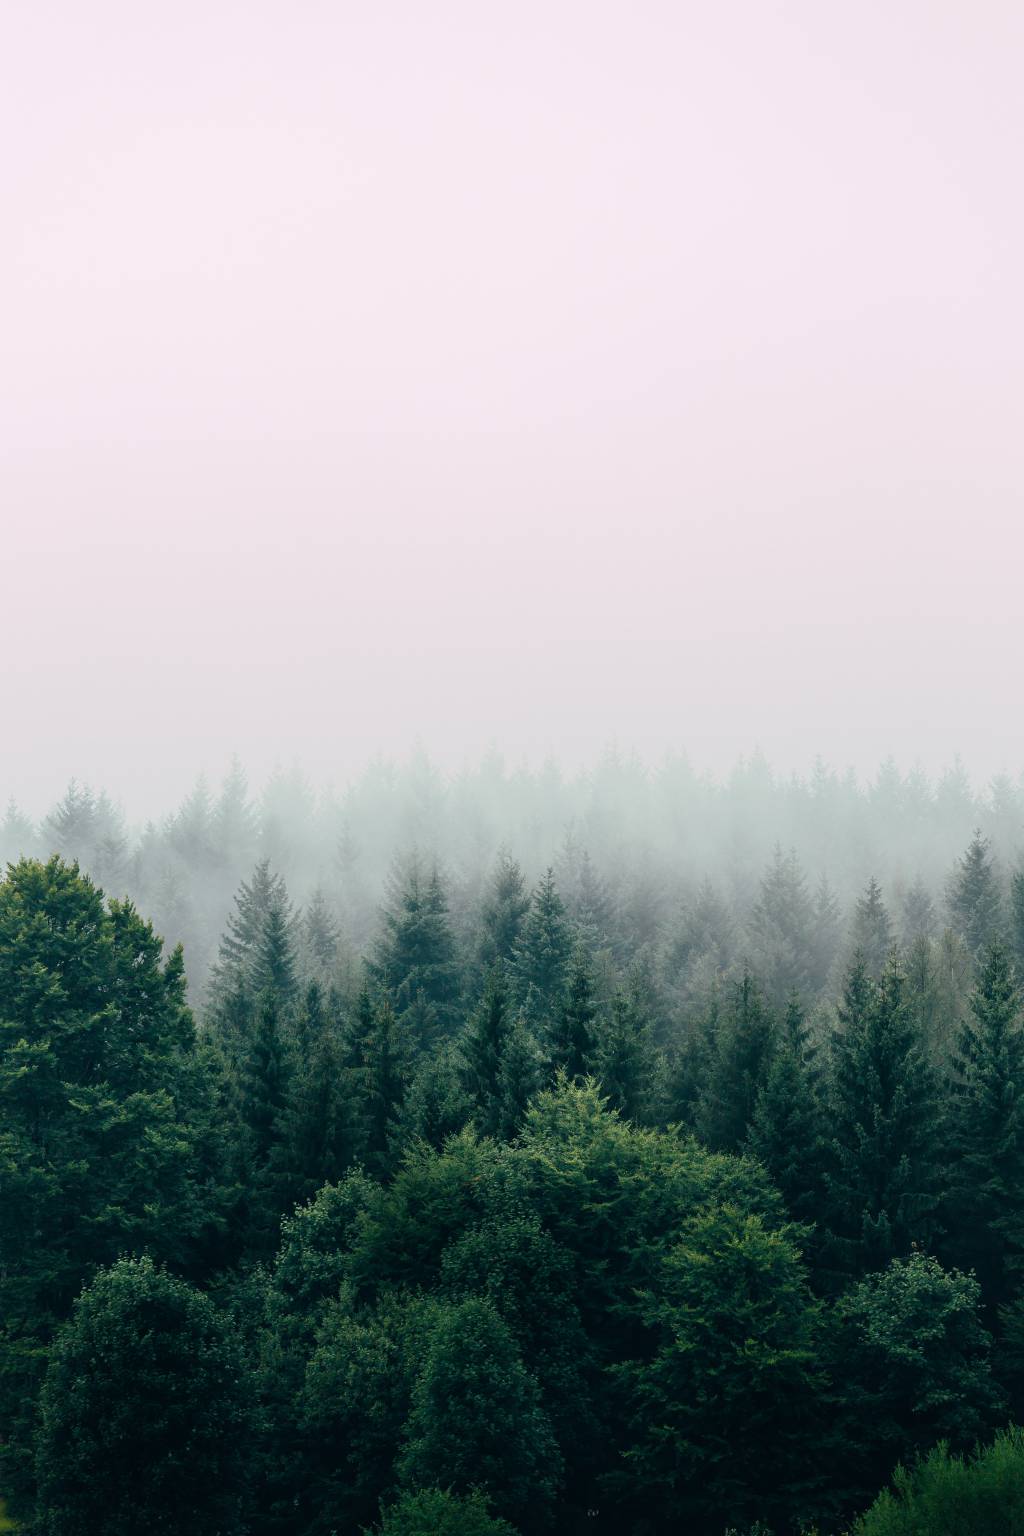 tree-green-mist-vegetation-sky-ecosystem-1460911-pxhere.com.jpg